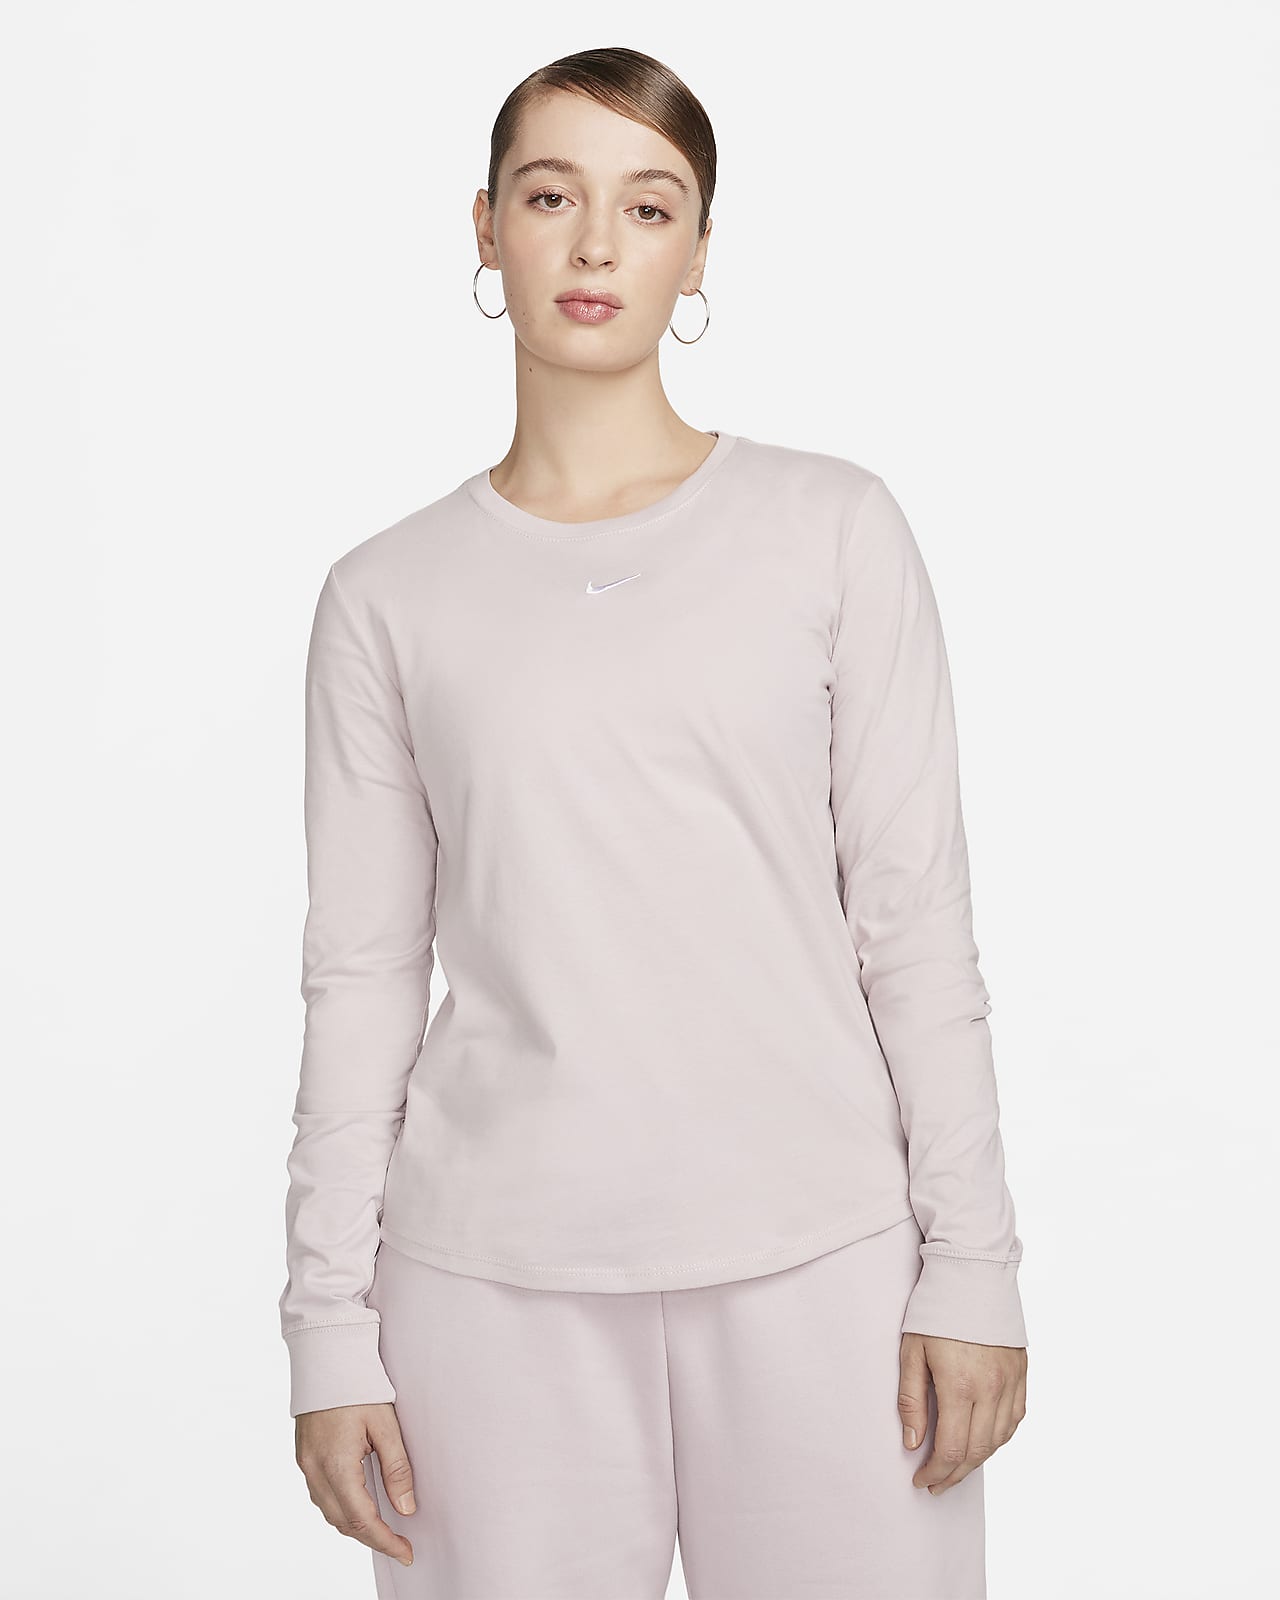 Nike Women\'s Premium Long-Sleeve T-Shirt. Essentials Sportswear